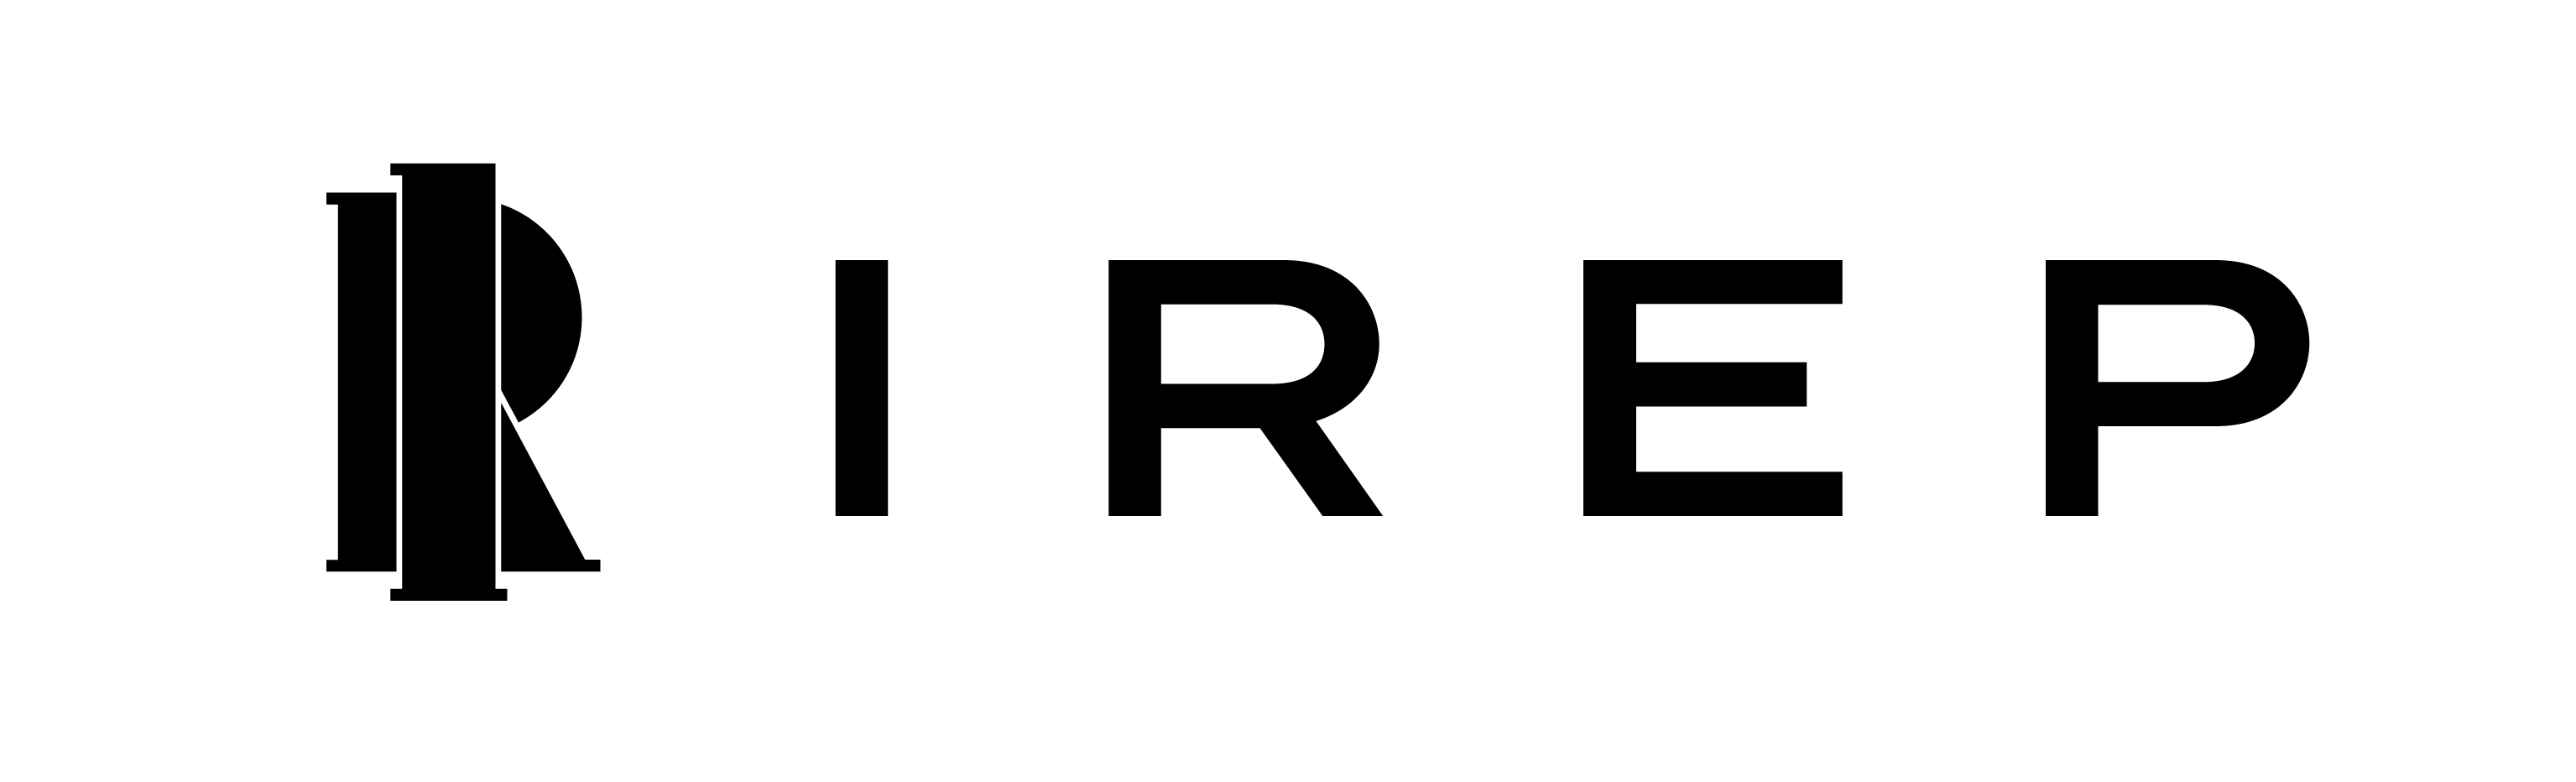 IREP_Combination Logo_Horizontal_black